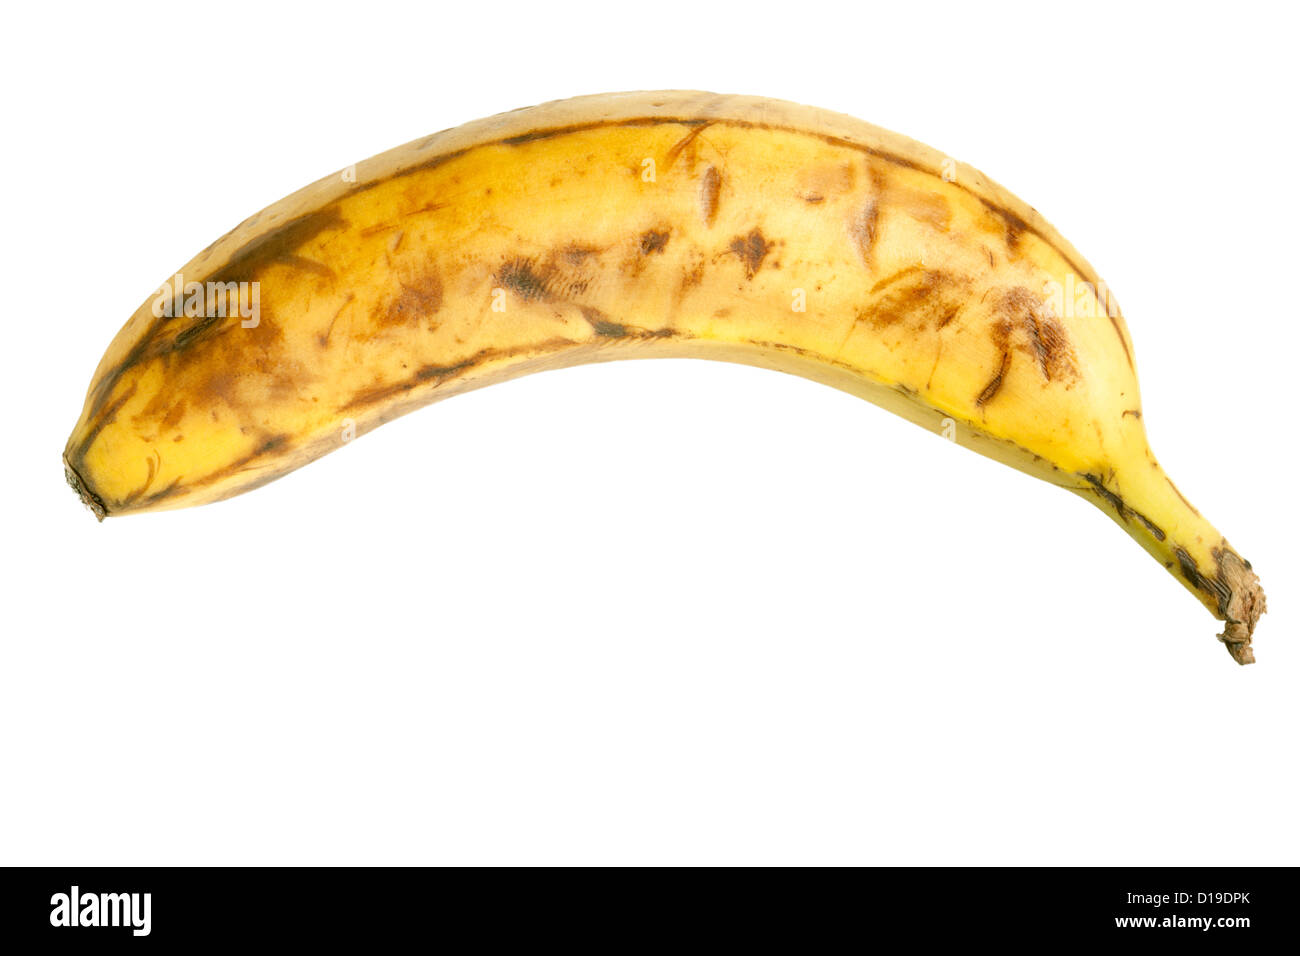 Banana with brown skin Stock Photo